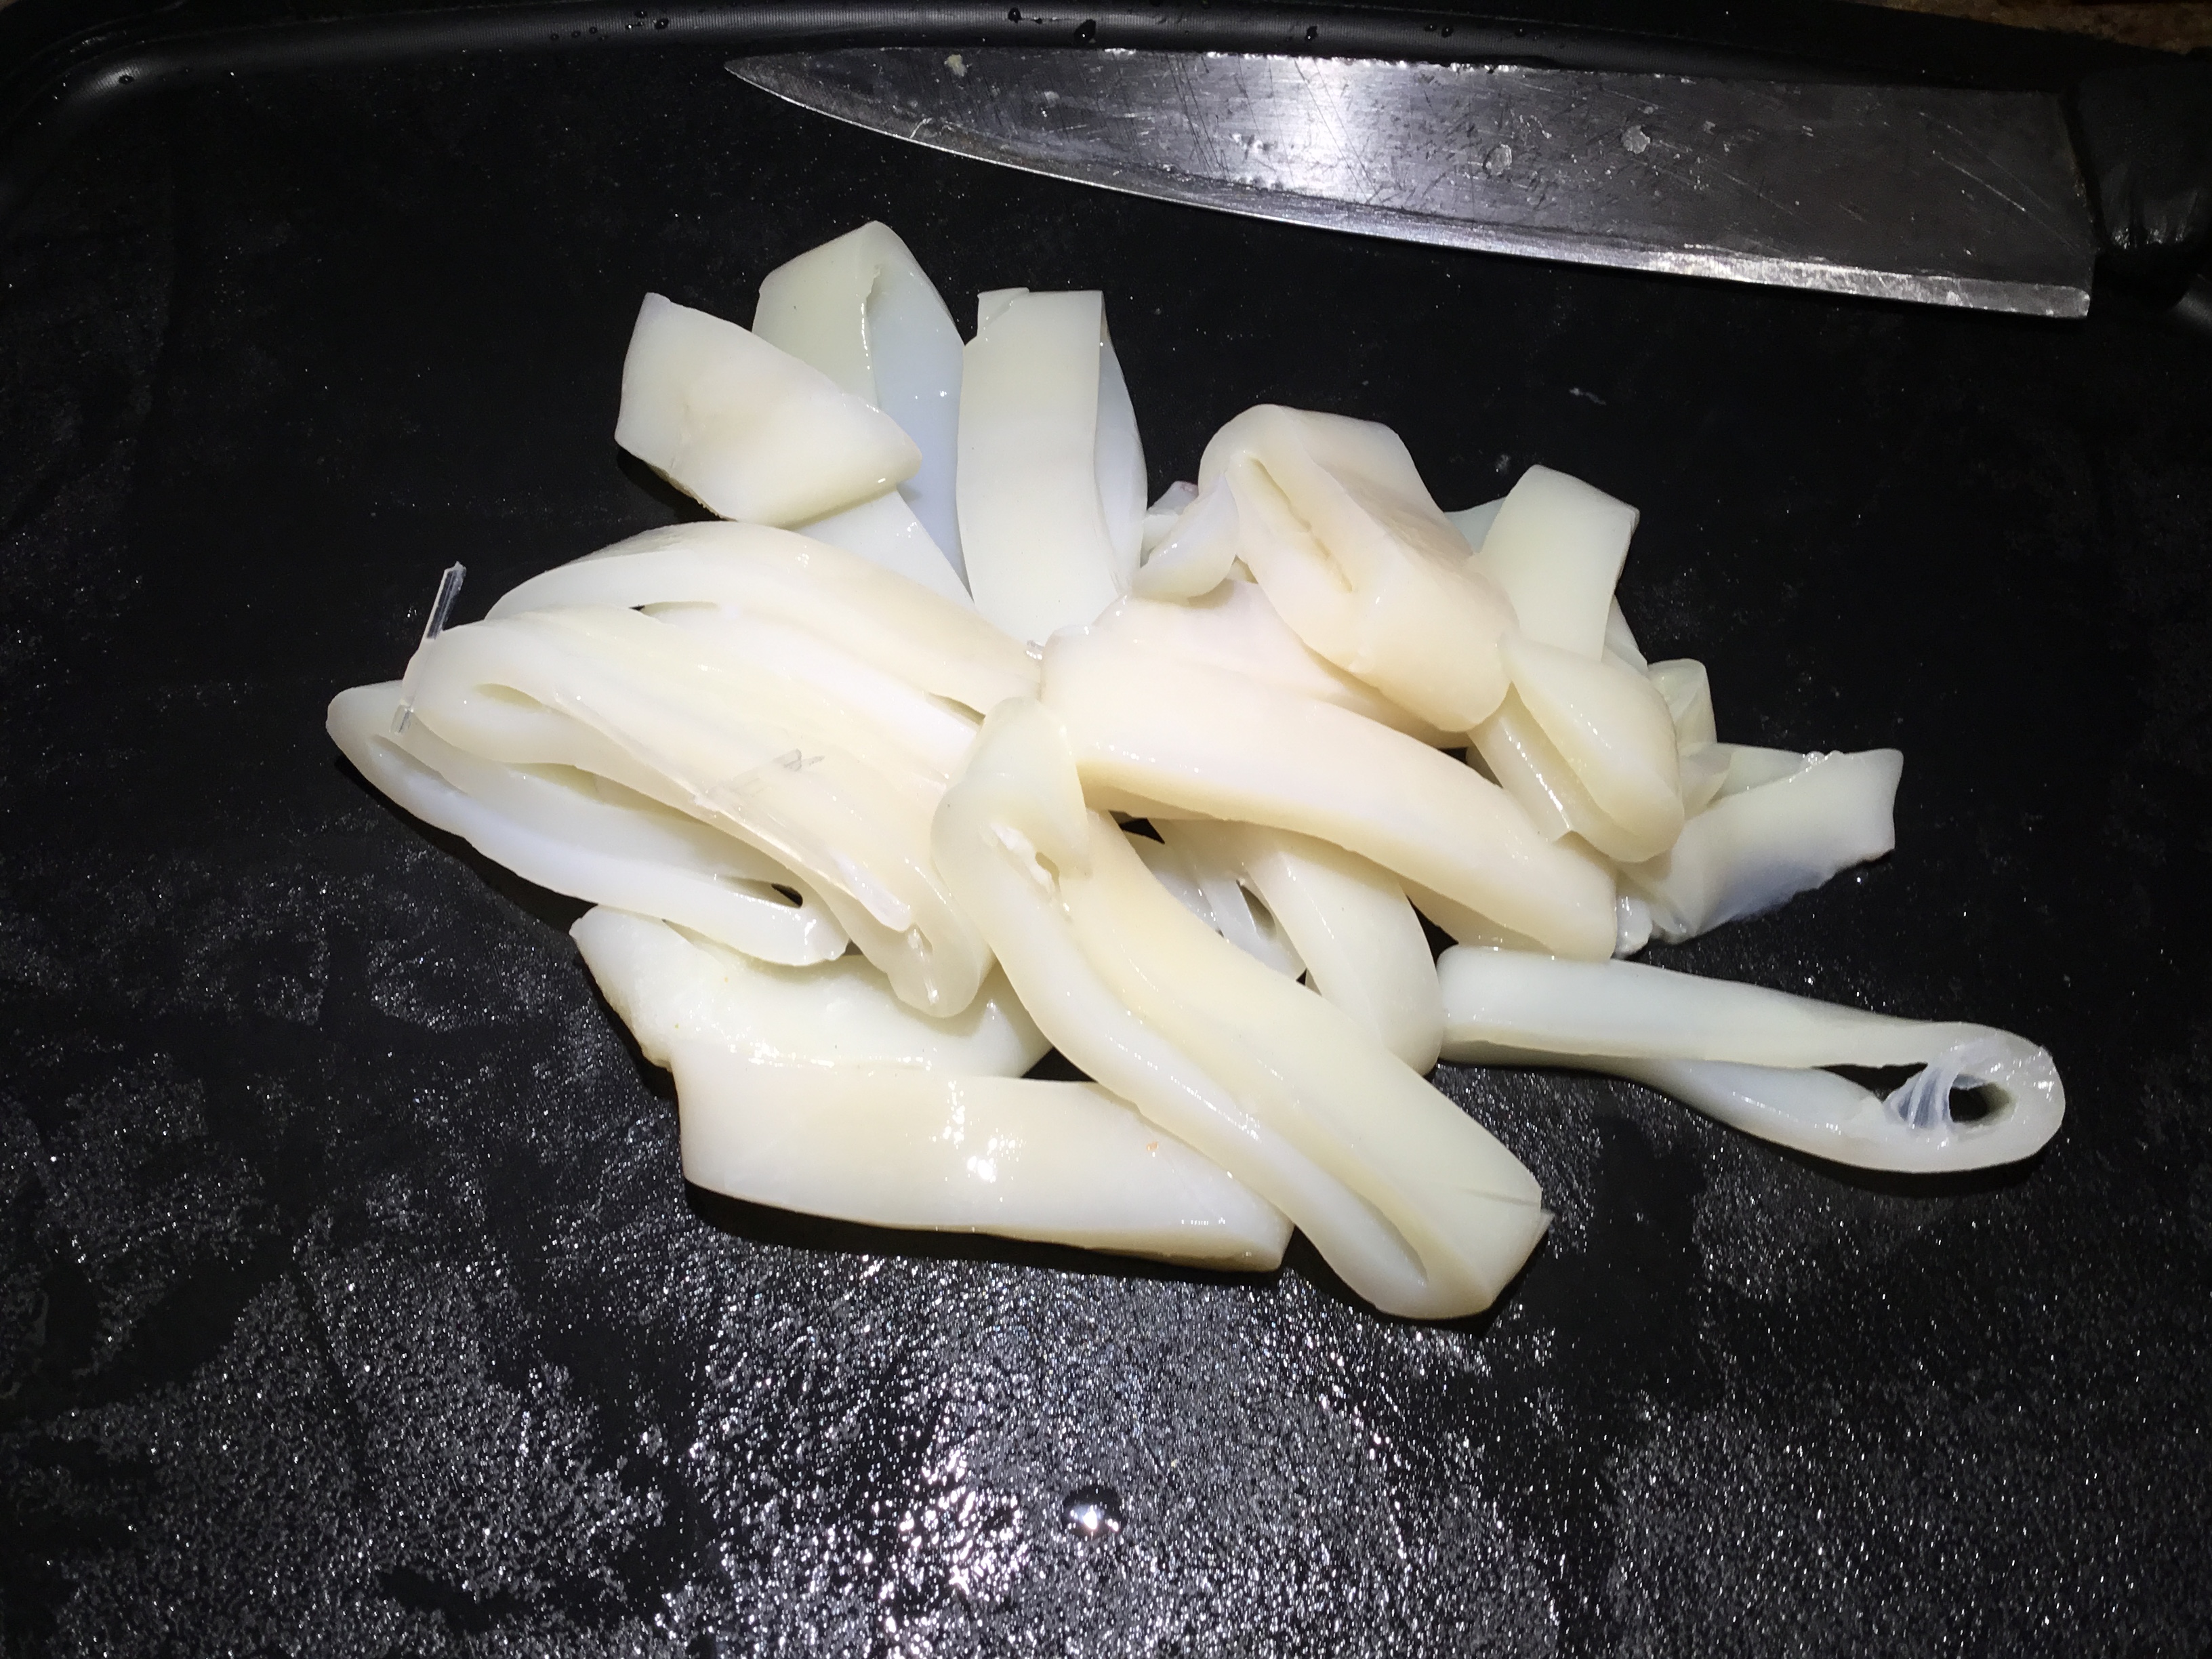 Ojingeo Bokkeum (Spicy Stir Fried Squid) - STONED SOUP